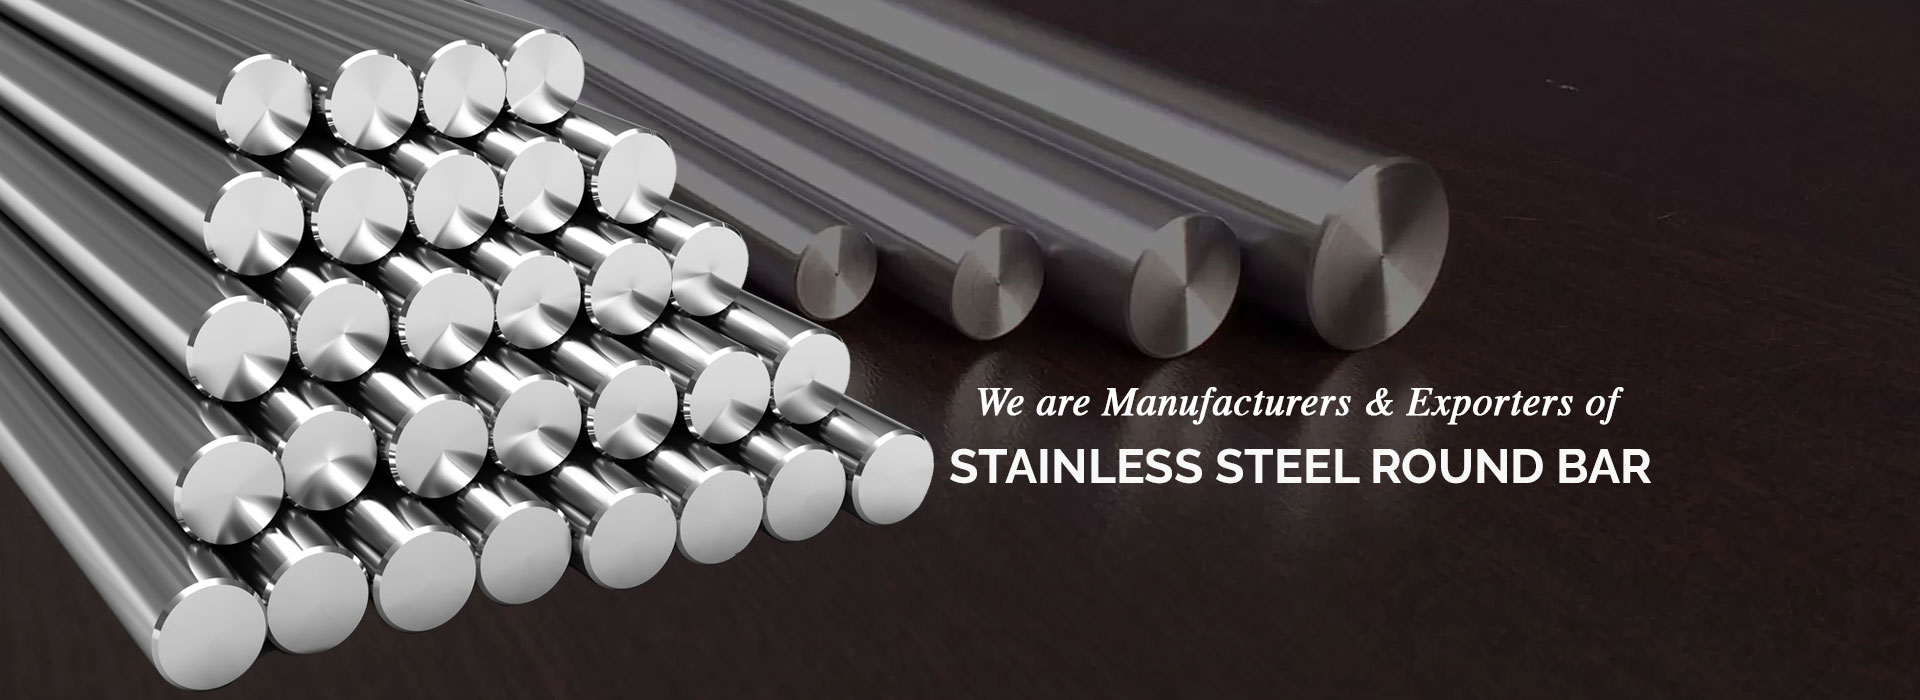 Stainless Steel Round Bar Manufacturers in Thailand